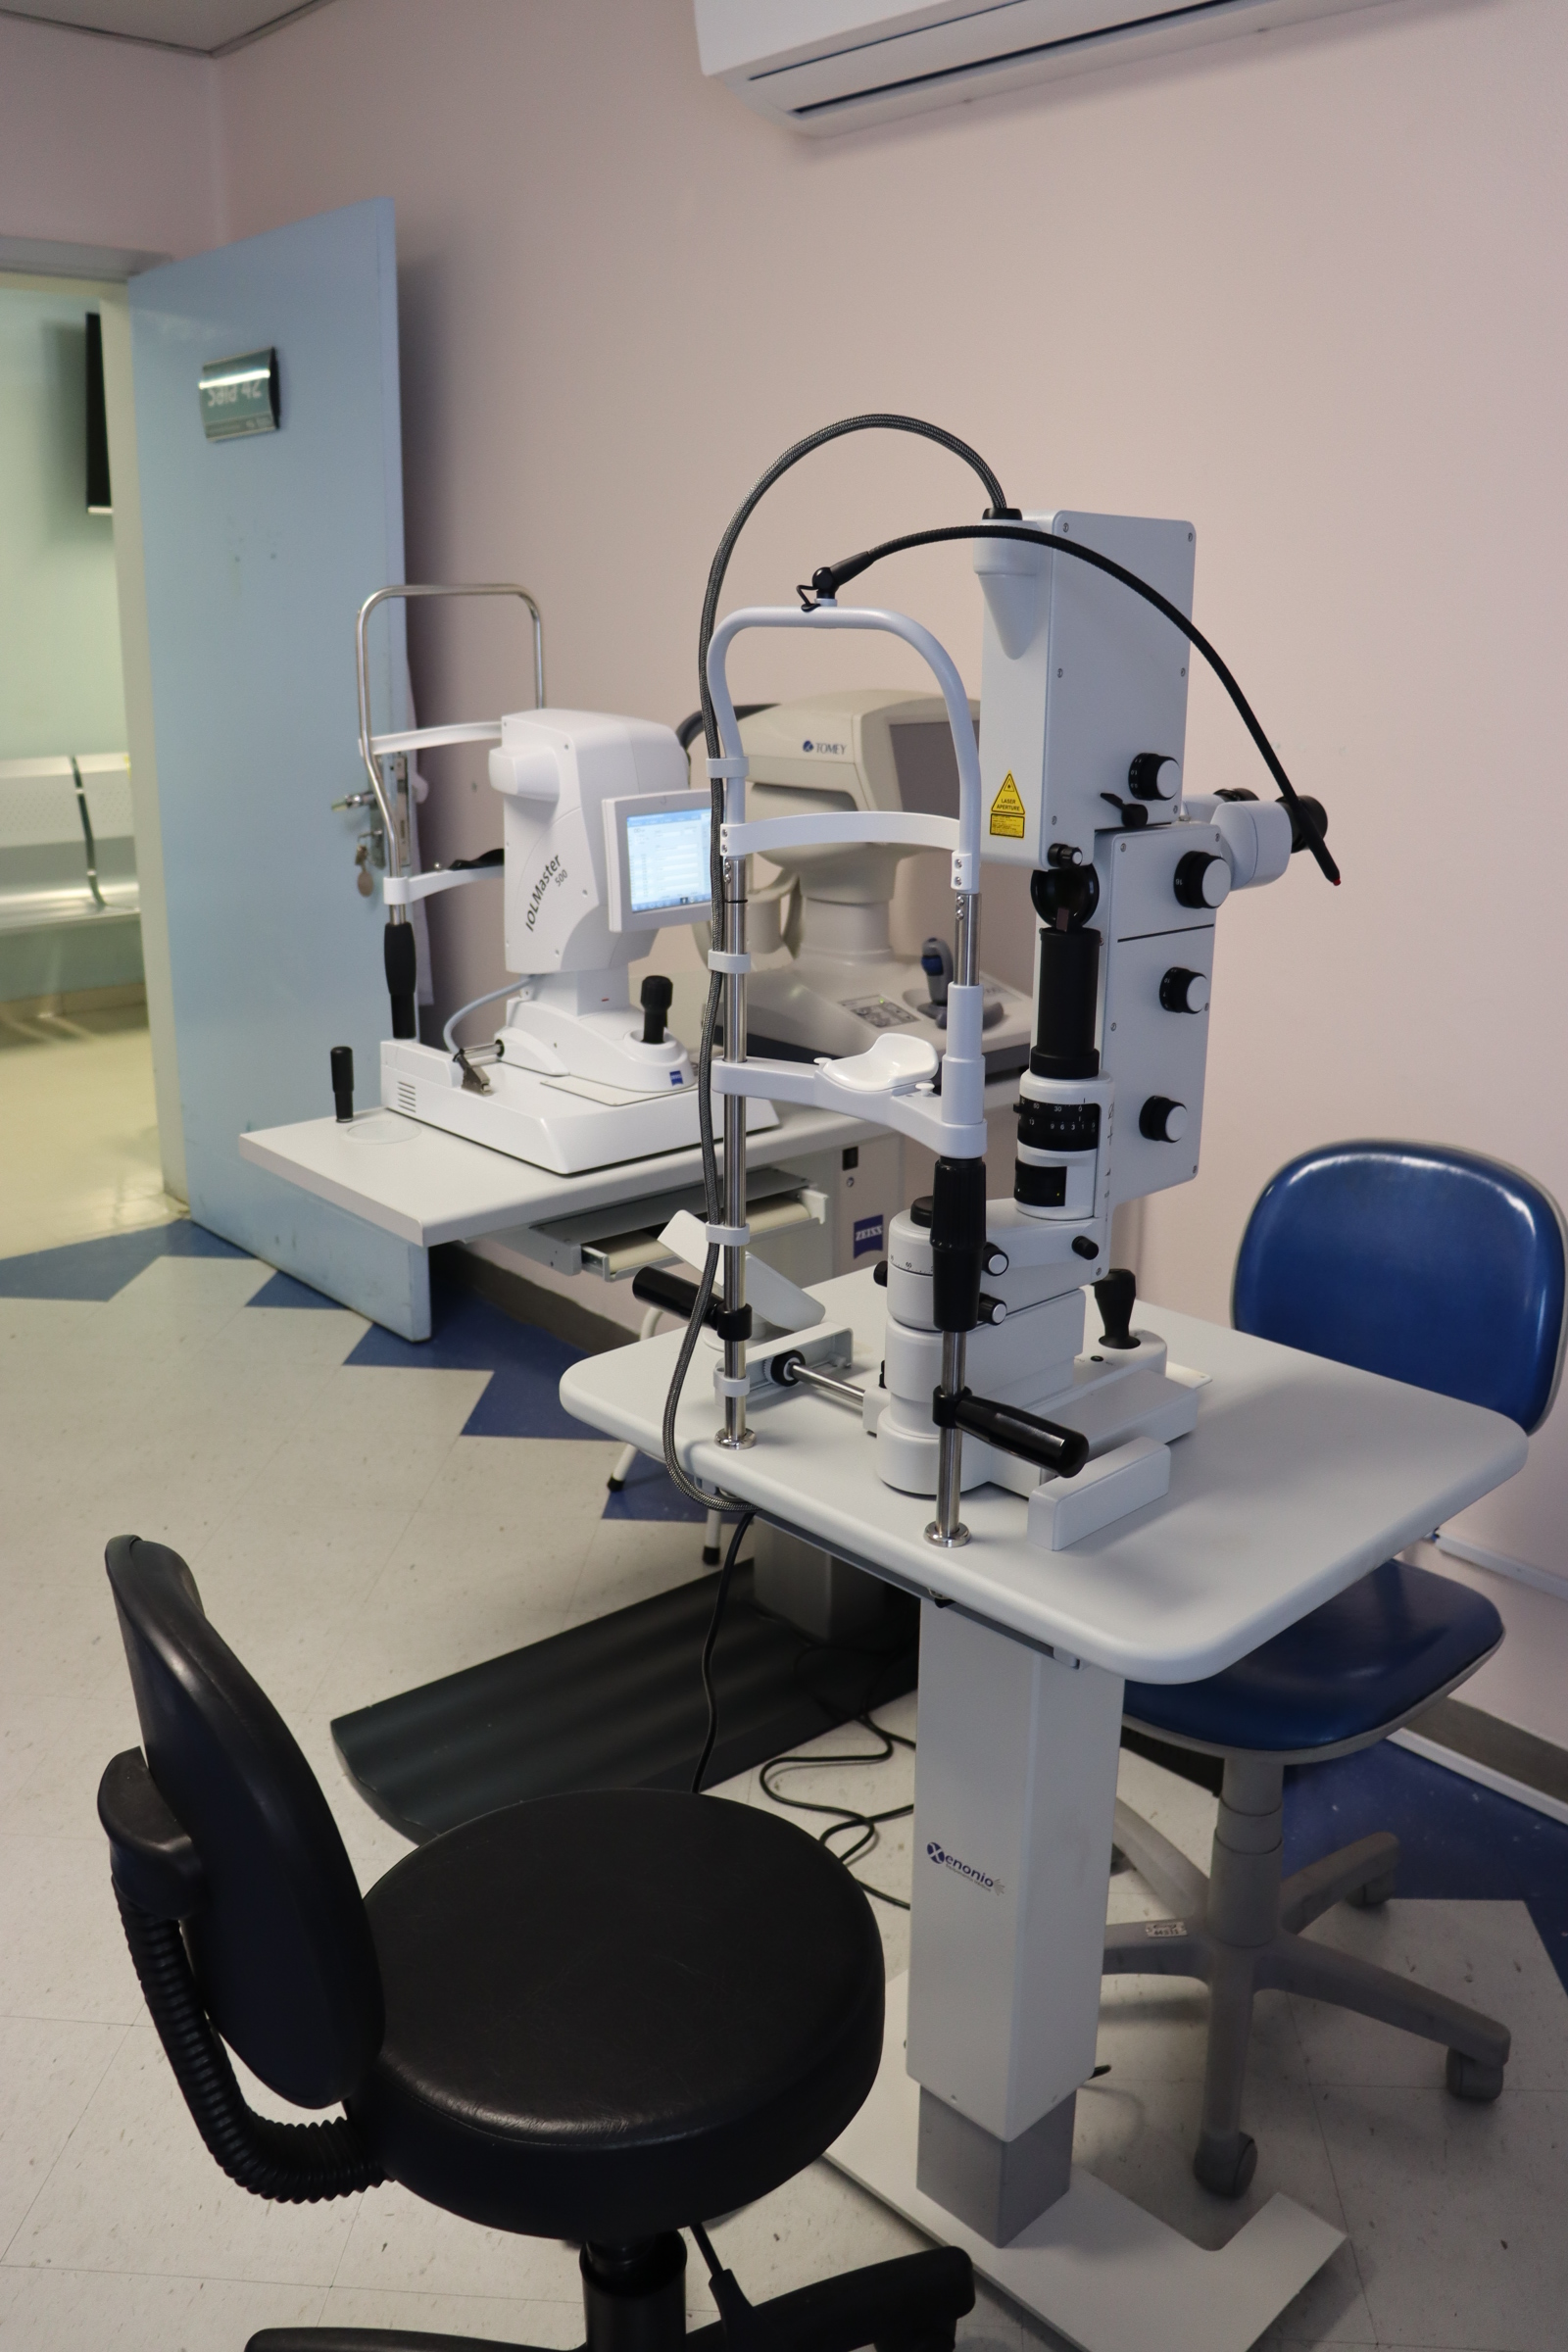 Foto do equipamento de Yag Laser, na sala de atendimento da Clínica de Oftalmologia